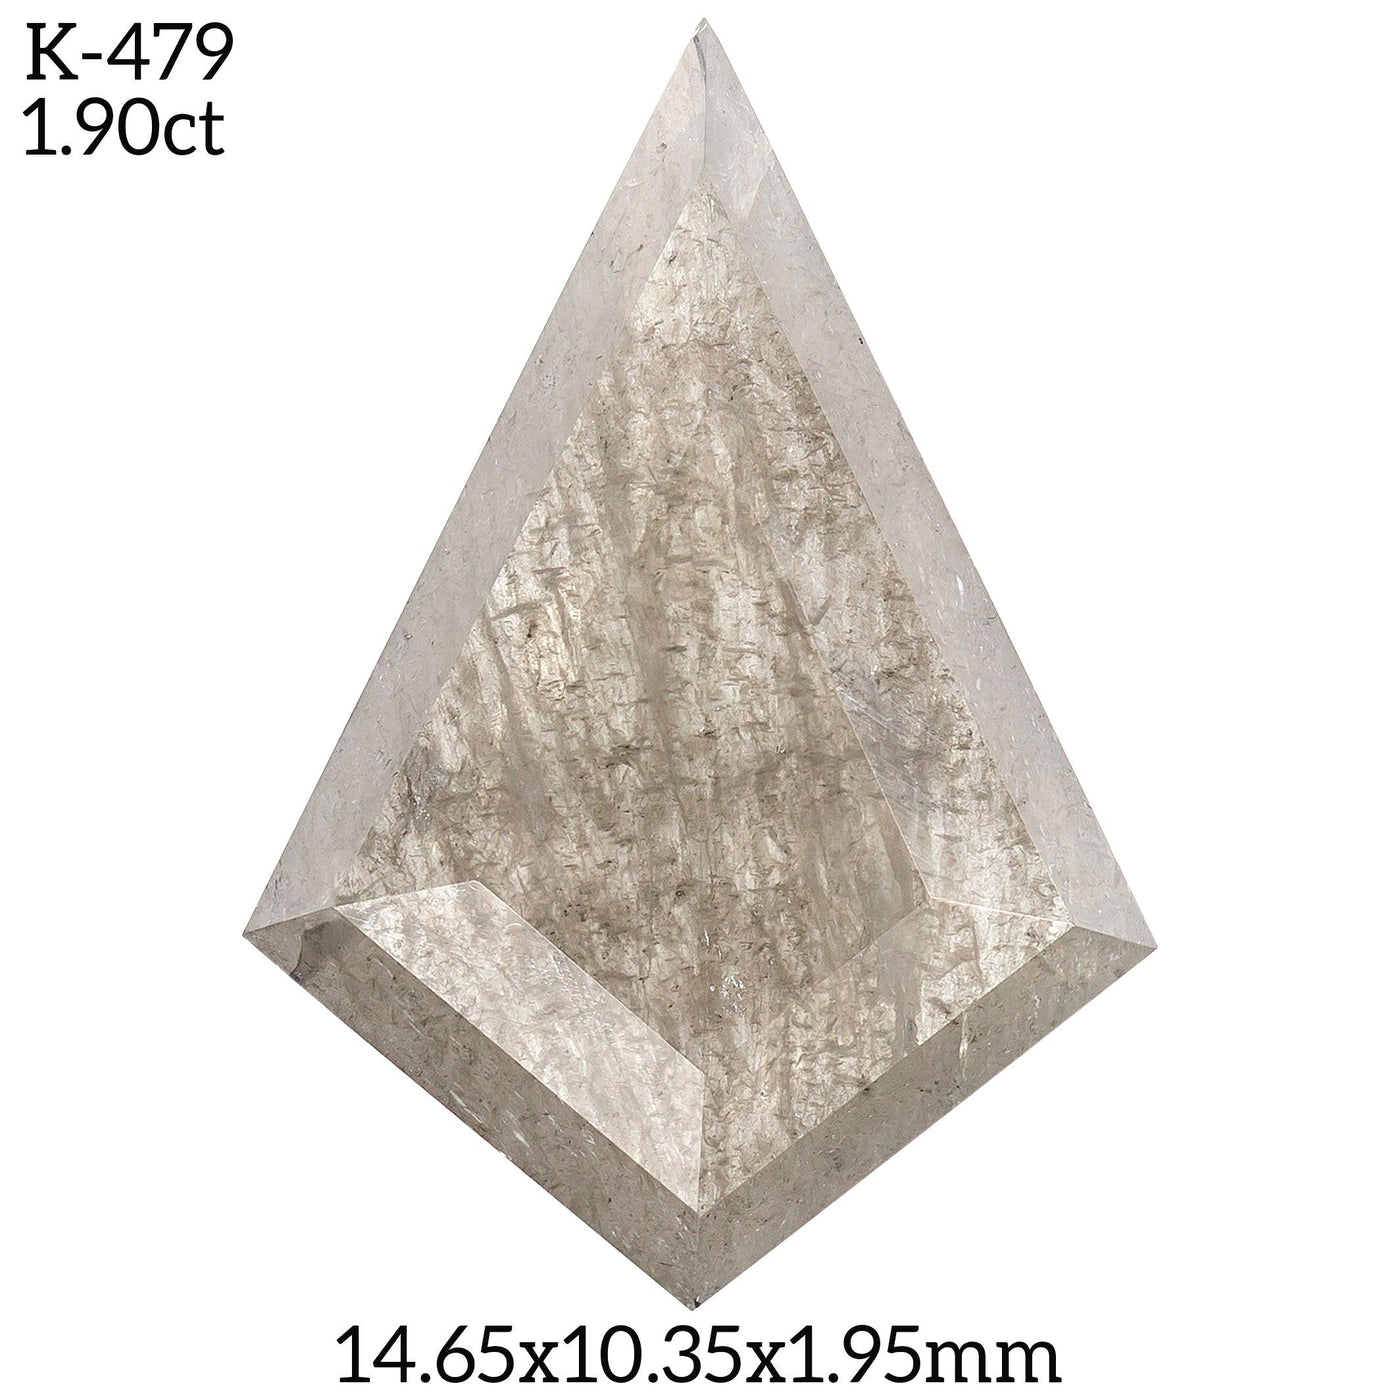 K479 - Salt and pepper kite diamond - Rubysta